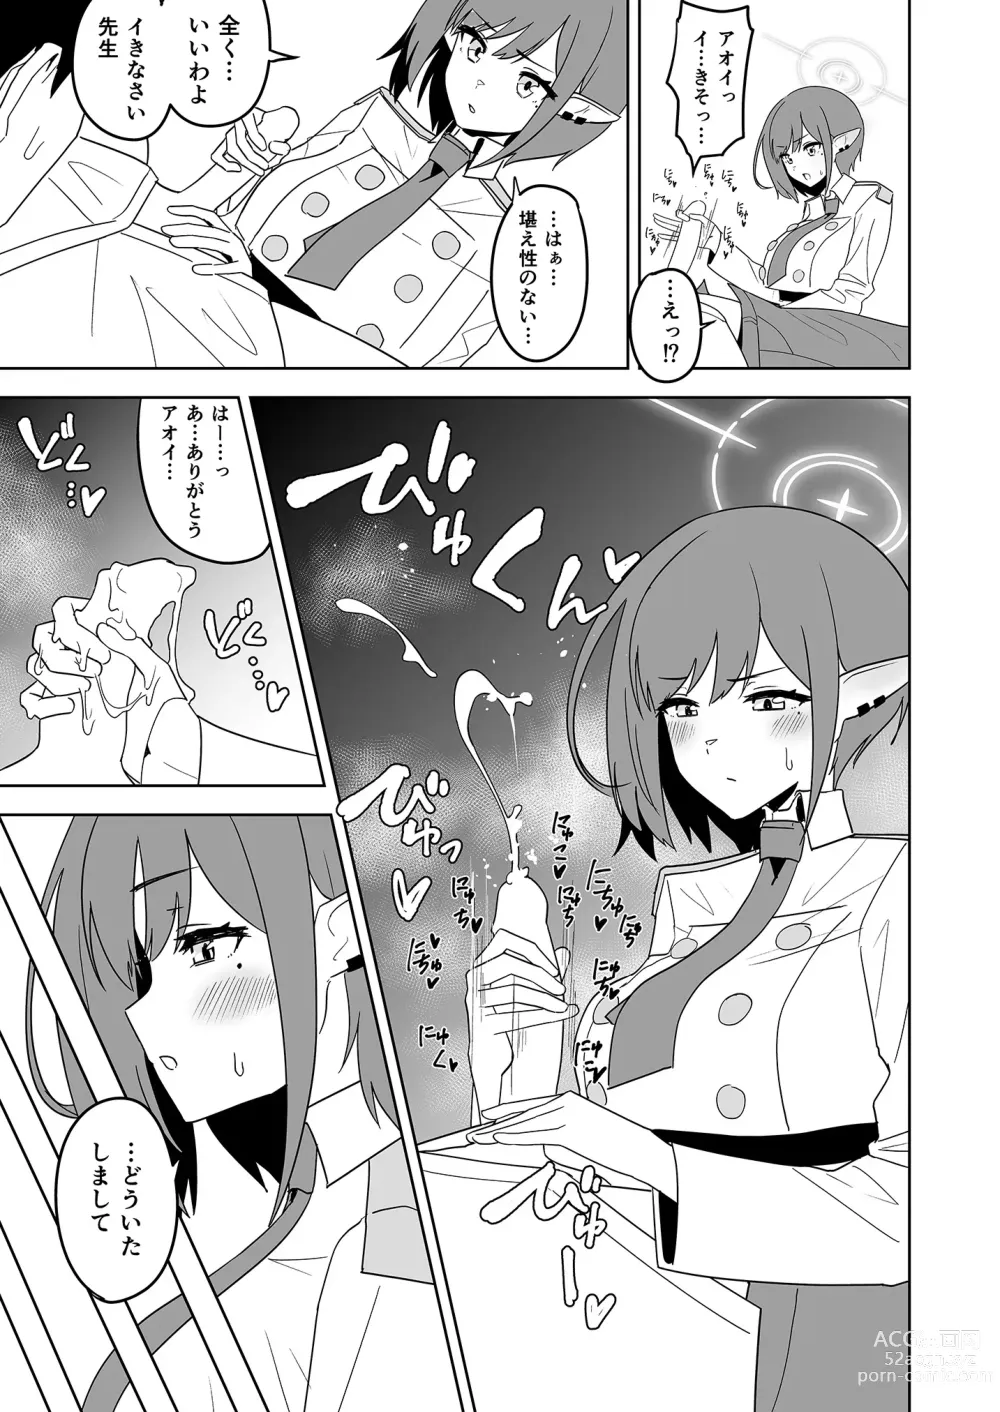 Page 6 of doujinshi Aoi ni Tekoki Shite Moraou - Lets Aoi give you a hand job.